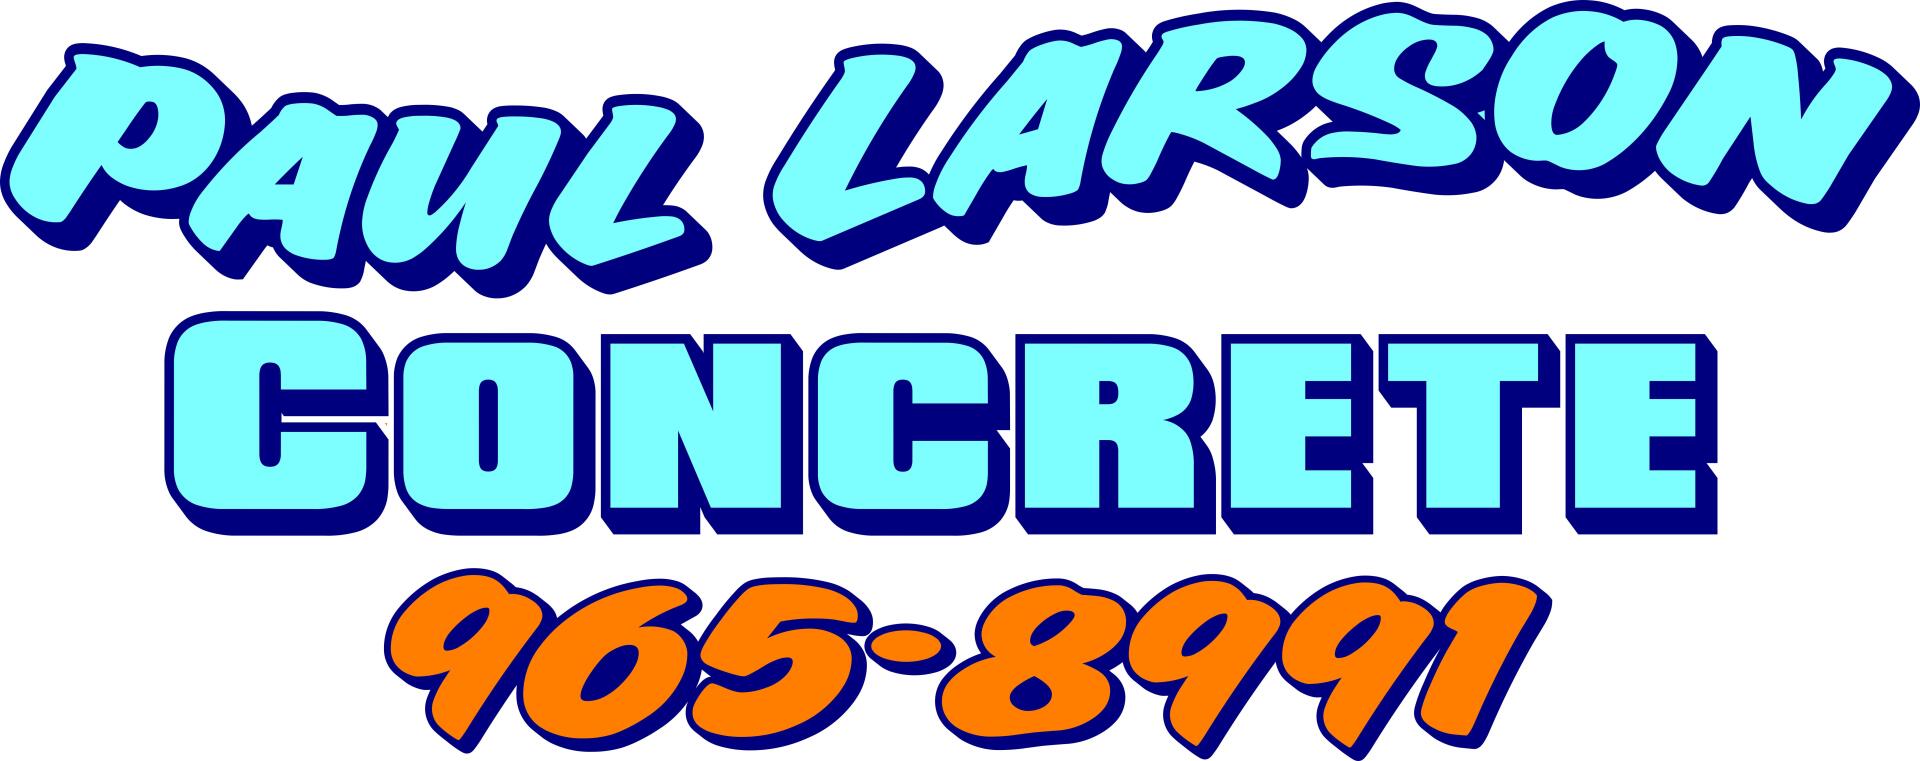 Paul Larson Concrete logo